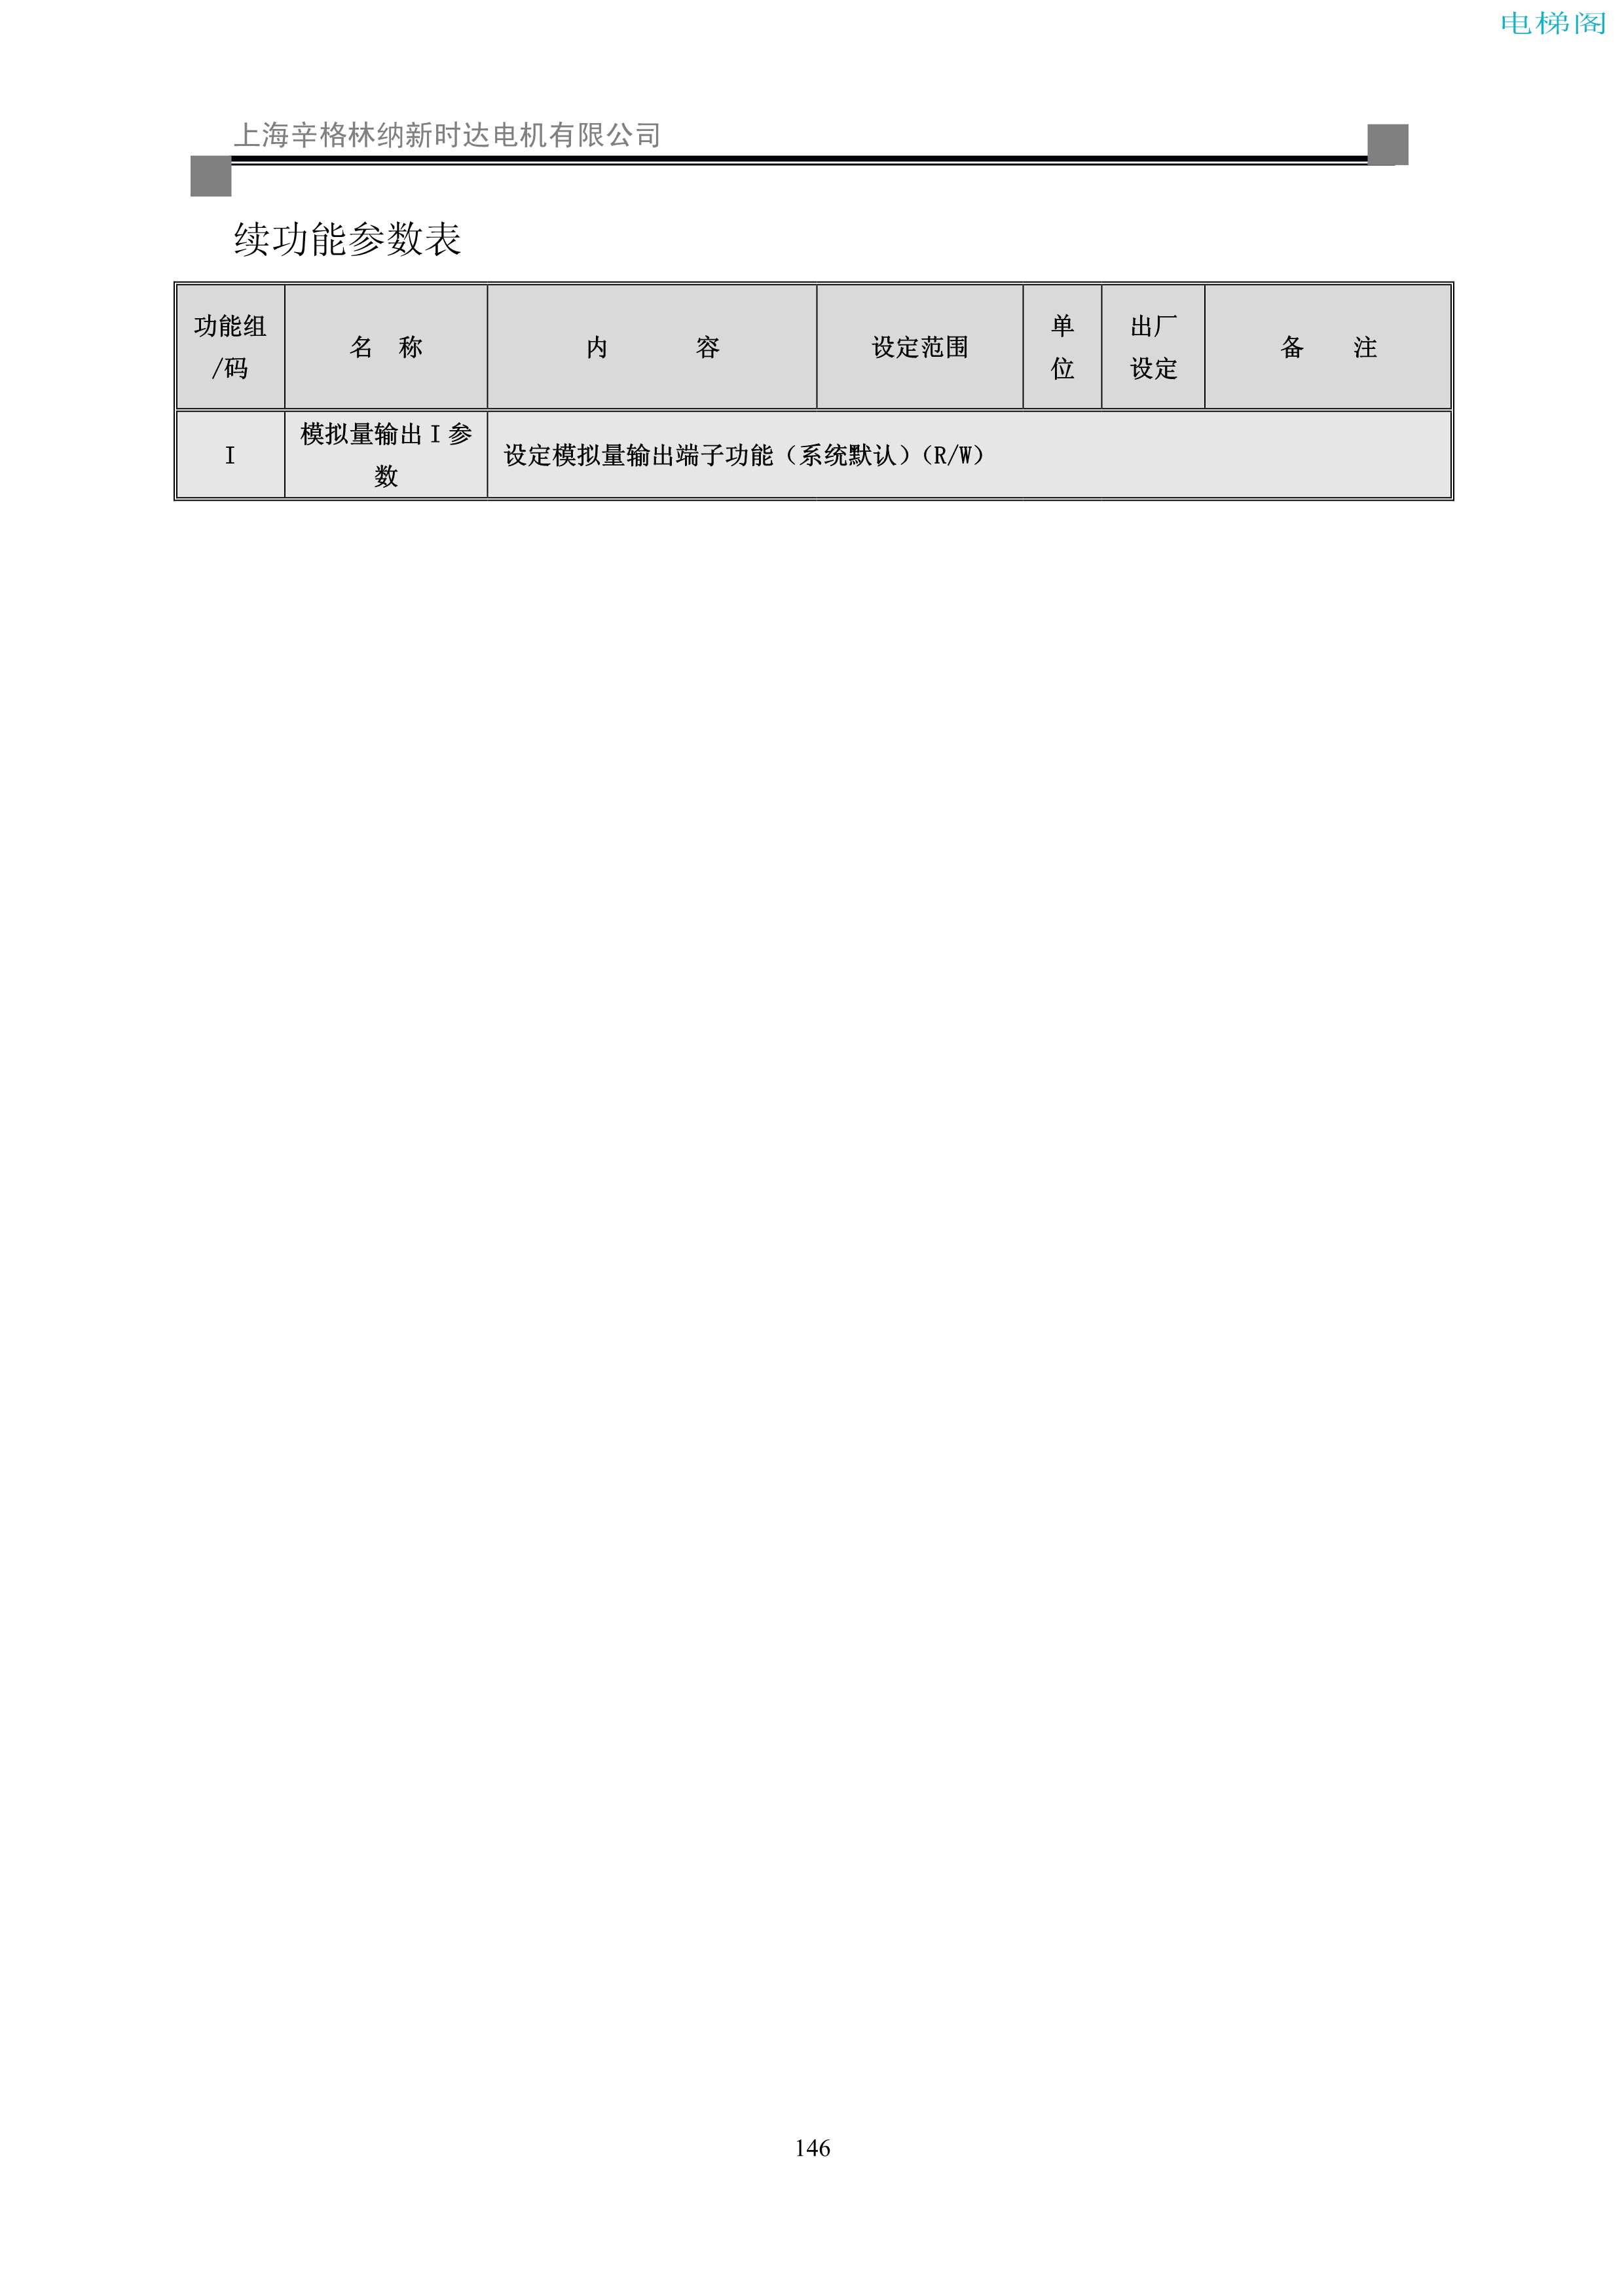 iAStar-S3系列电梯专用变频器使用说明书-9(V2[1].03)_154.jpg